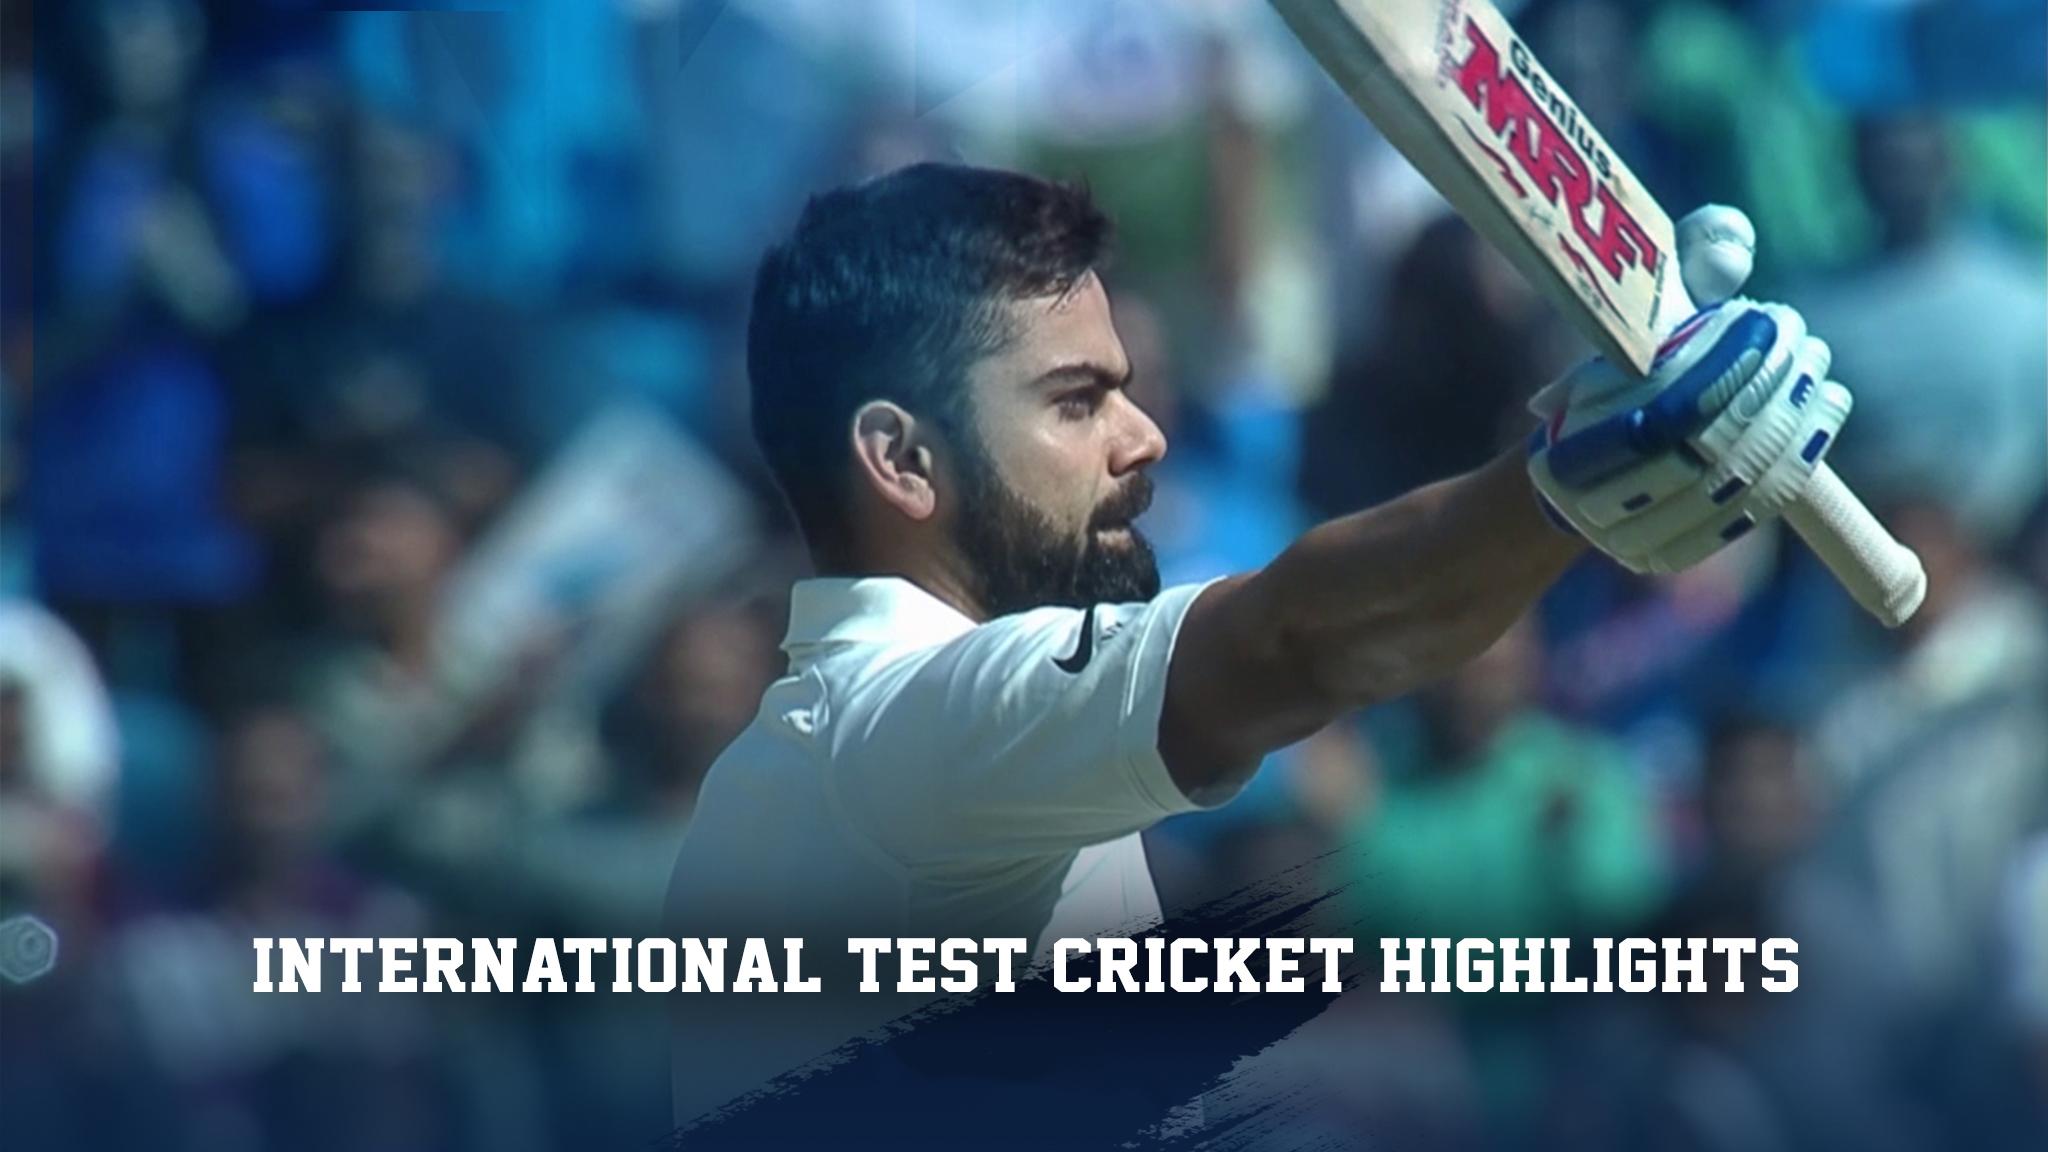 Stream And Watch International Test Cricket Highlights Online Sling TV